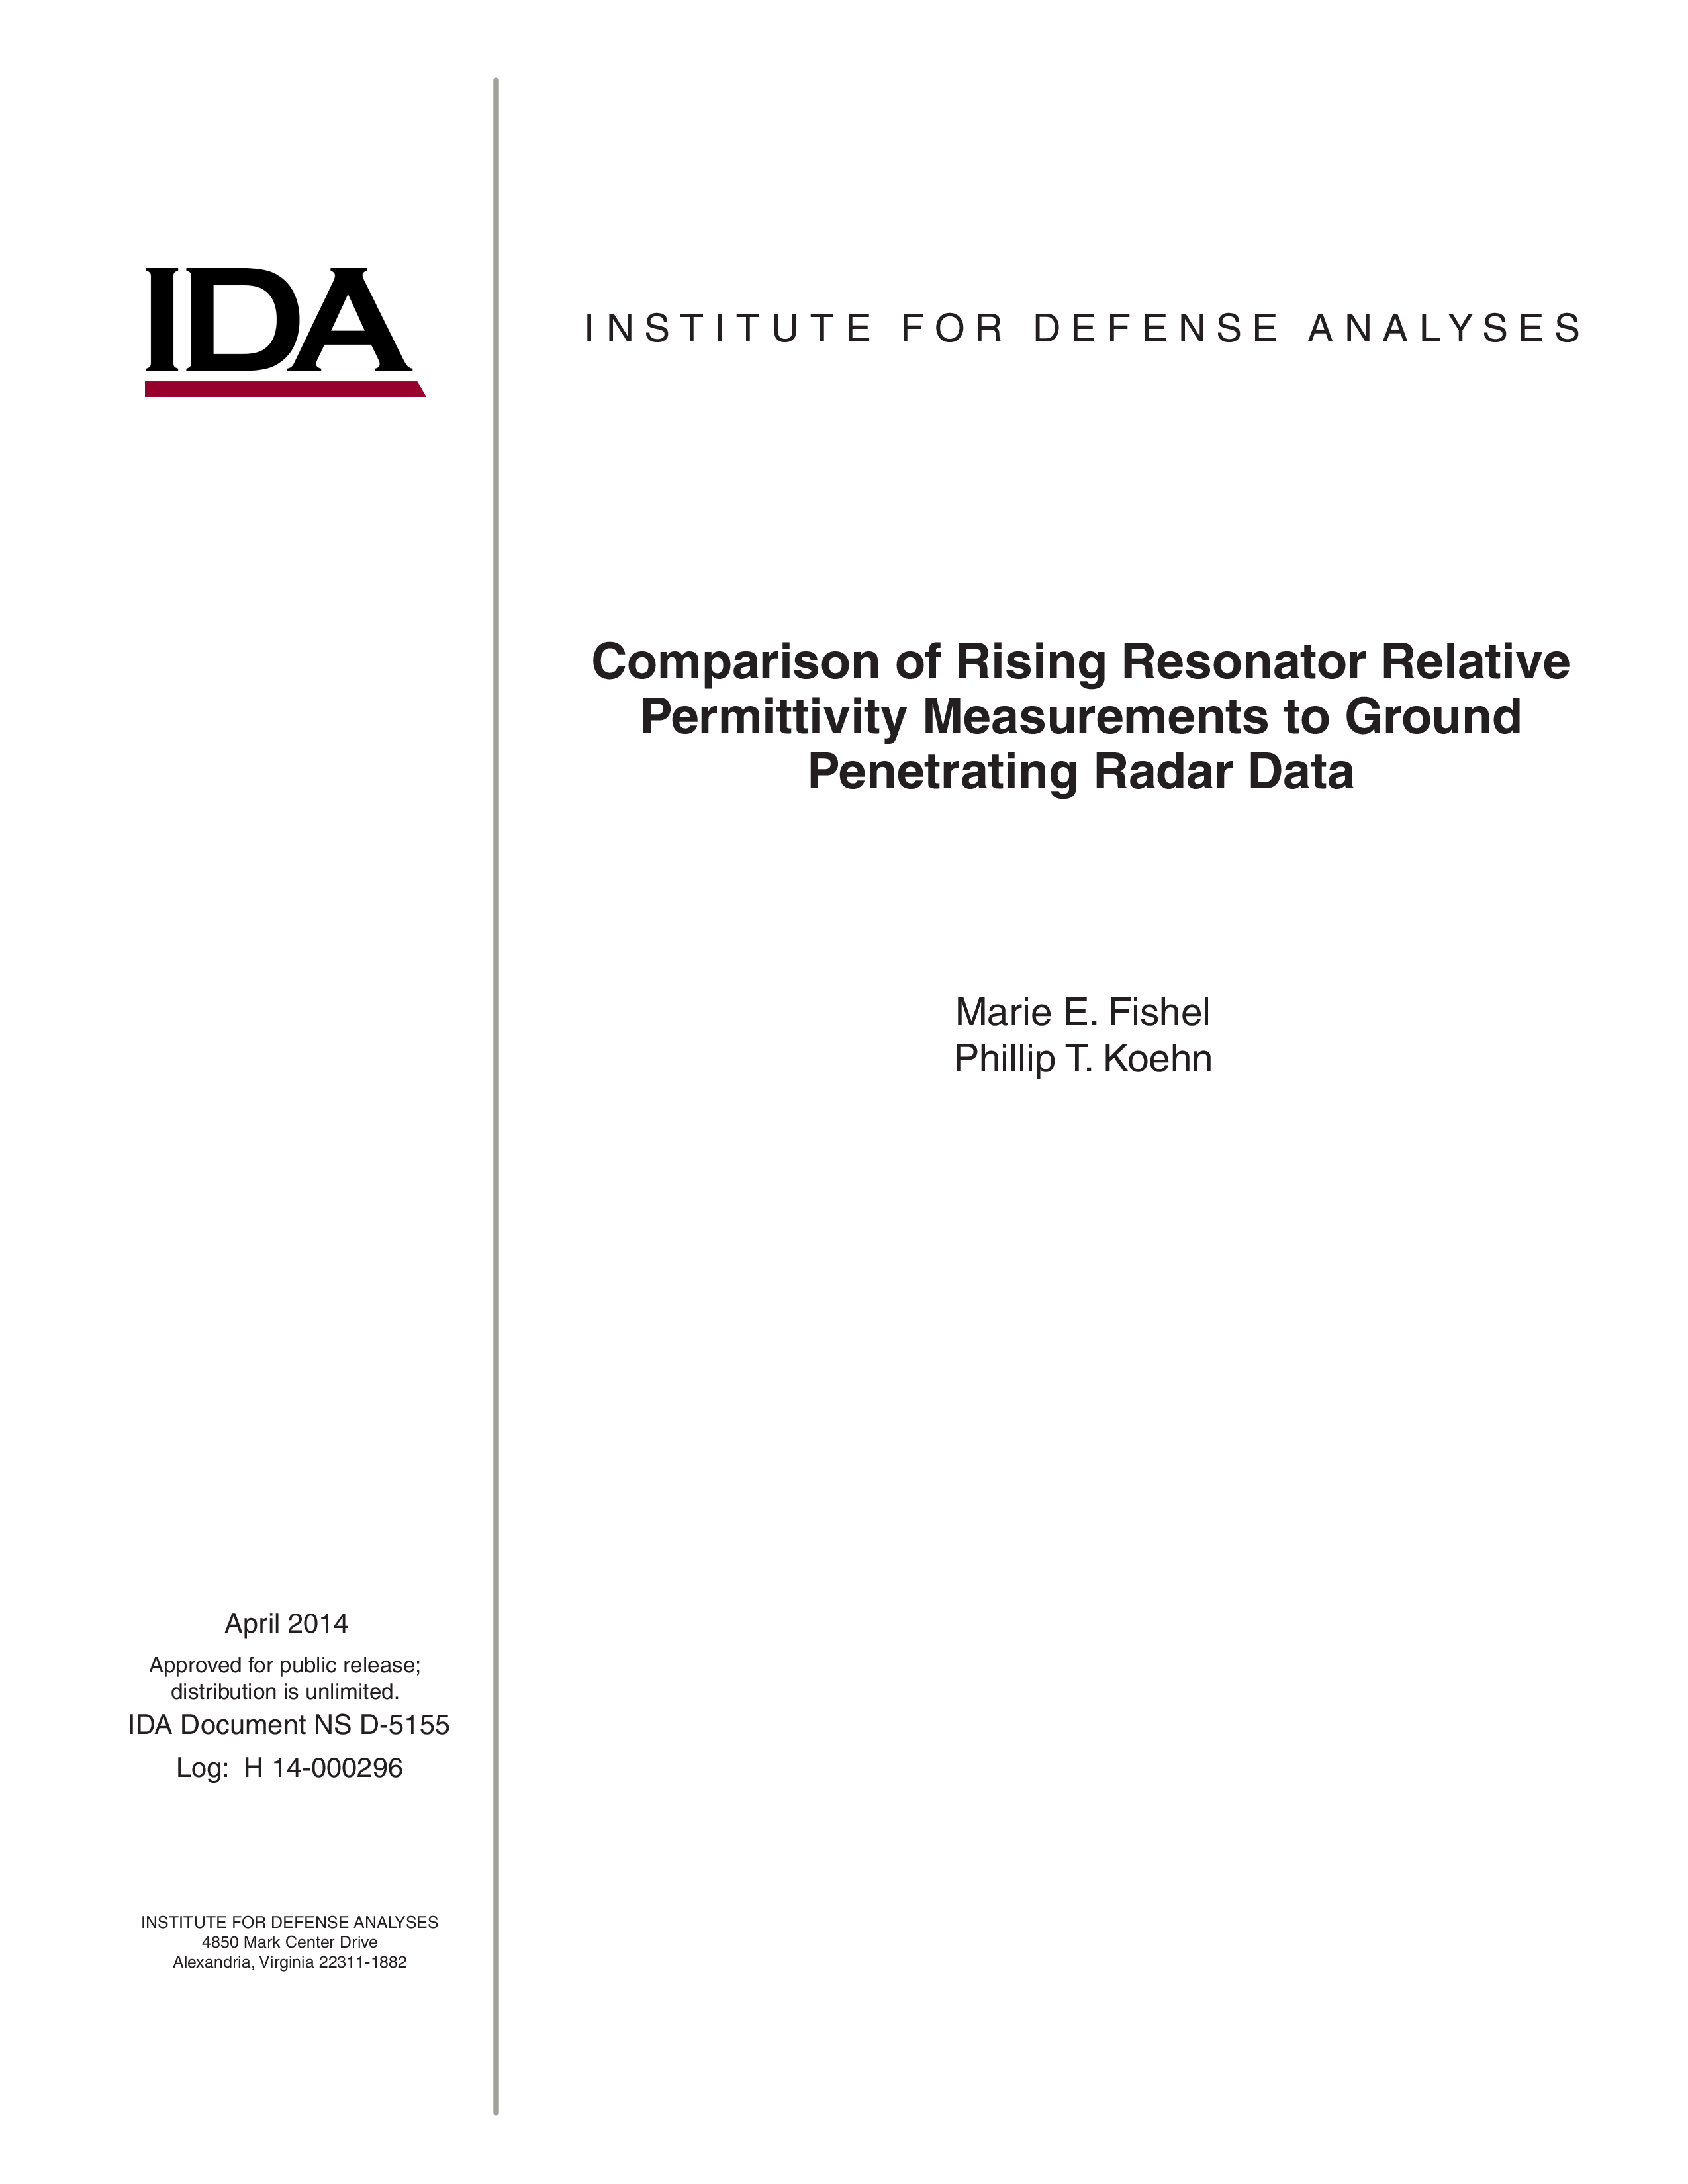 Comparison of Rising Resonator Relative Permittivity Measurements to Ground Penetrating Radar Data